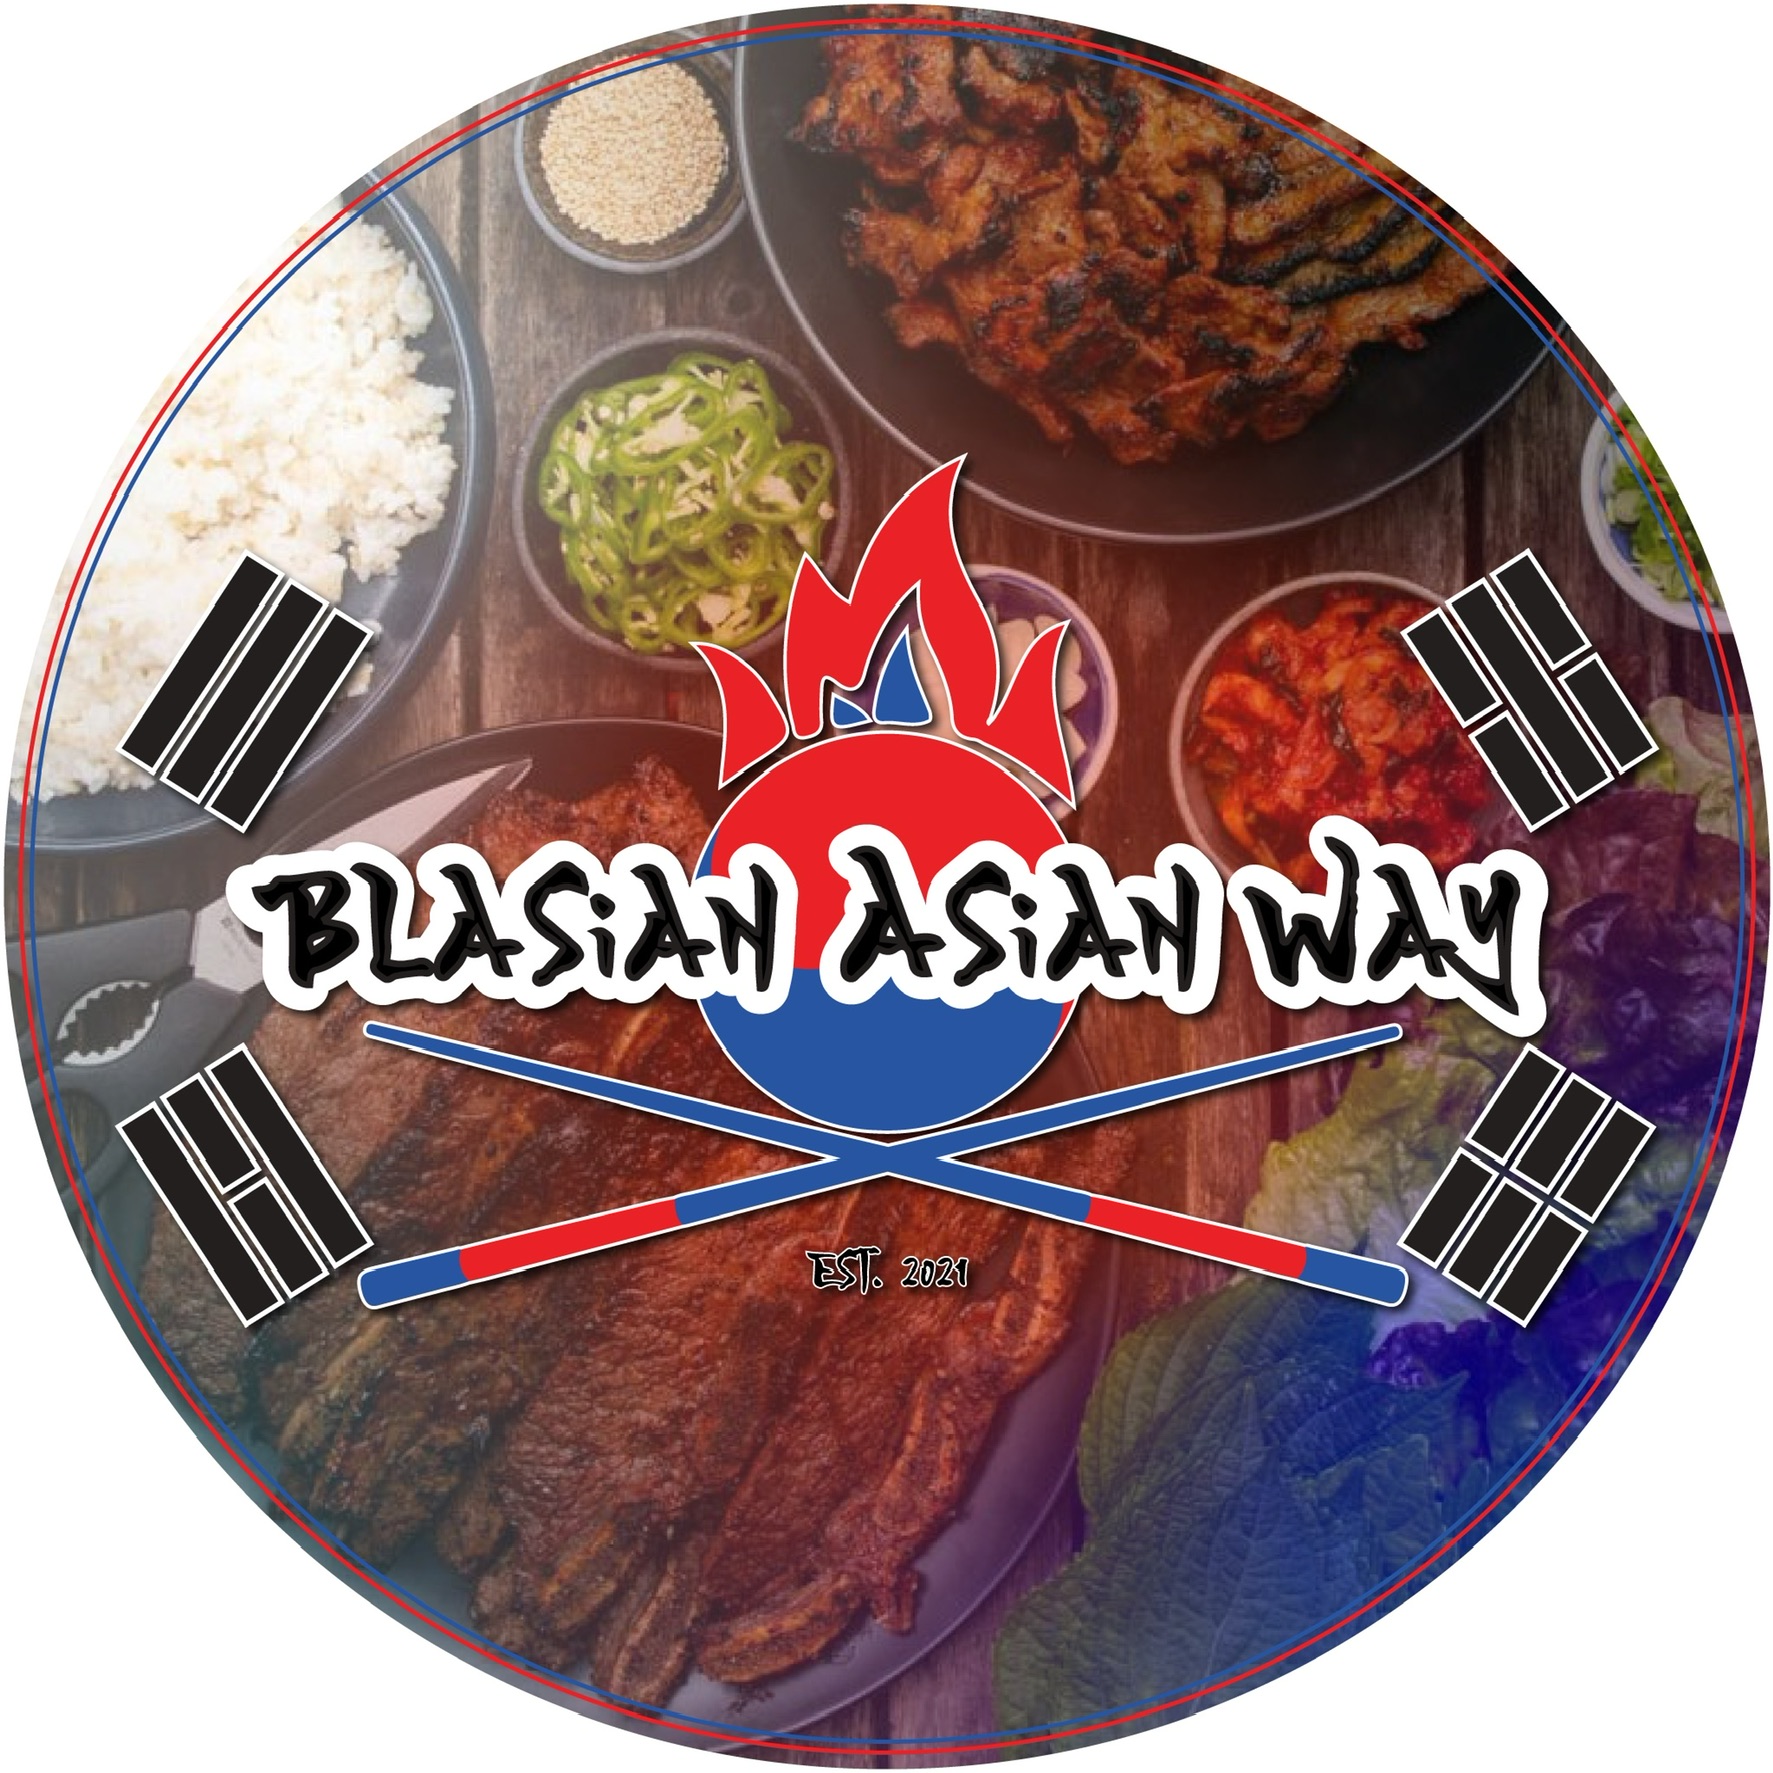 Blasian Asian Way